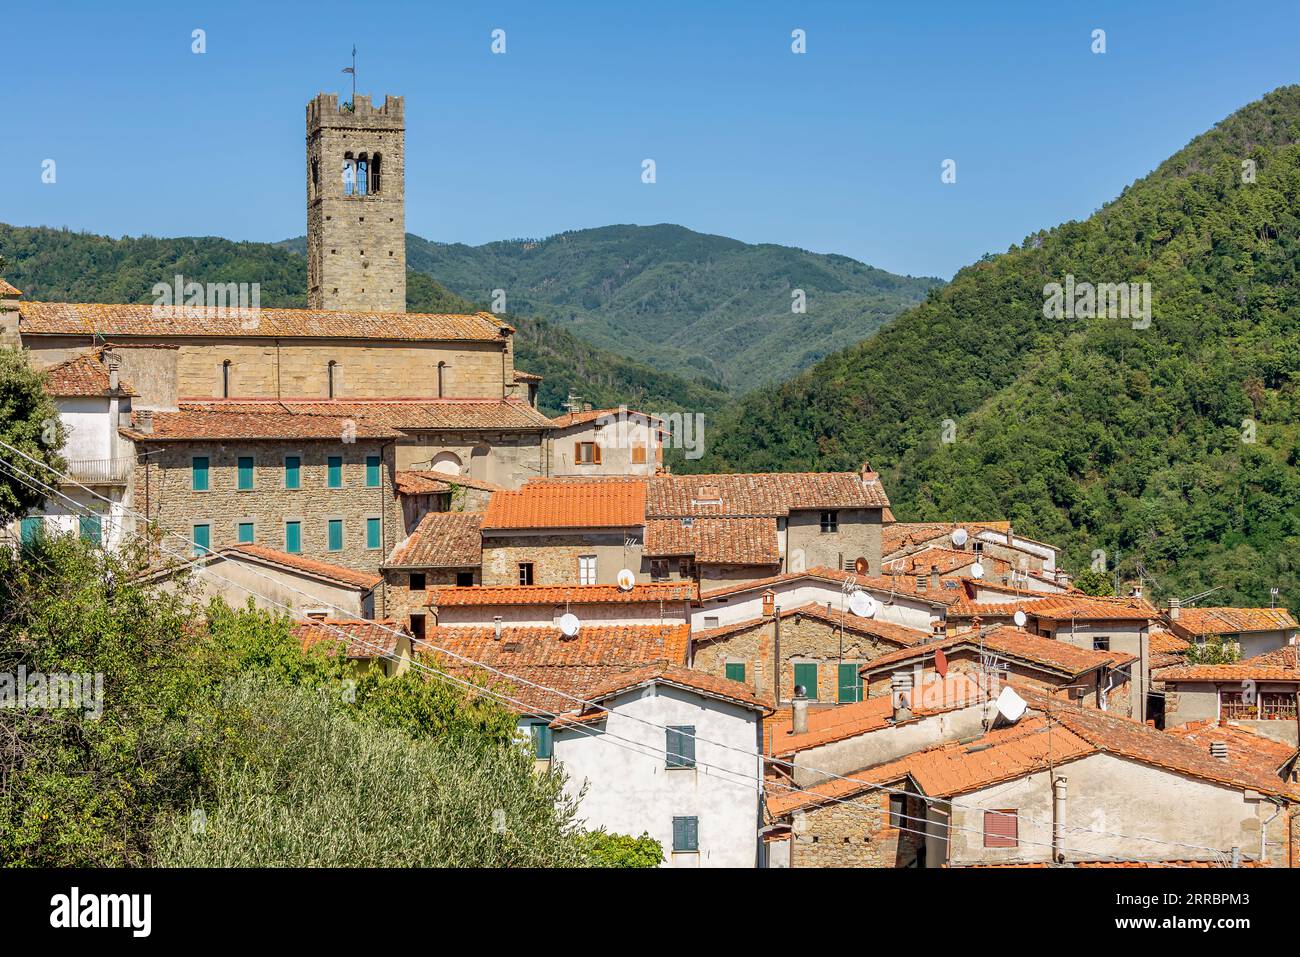 A glimpse of the historic center of Villa Basilica, Lucca, Italy Stock Photo